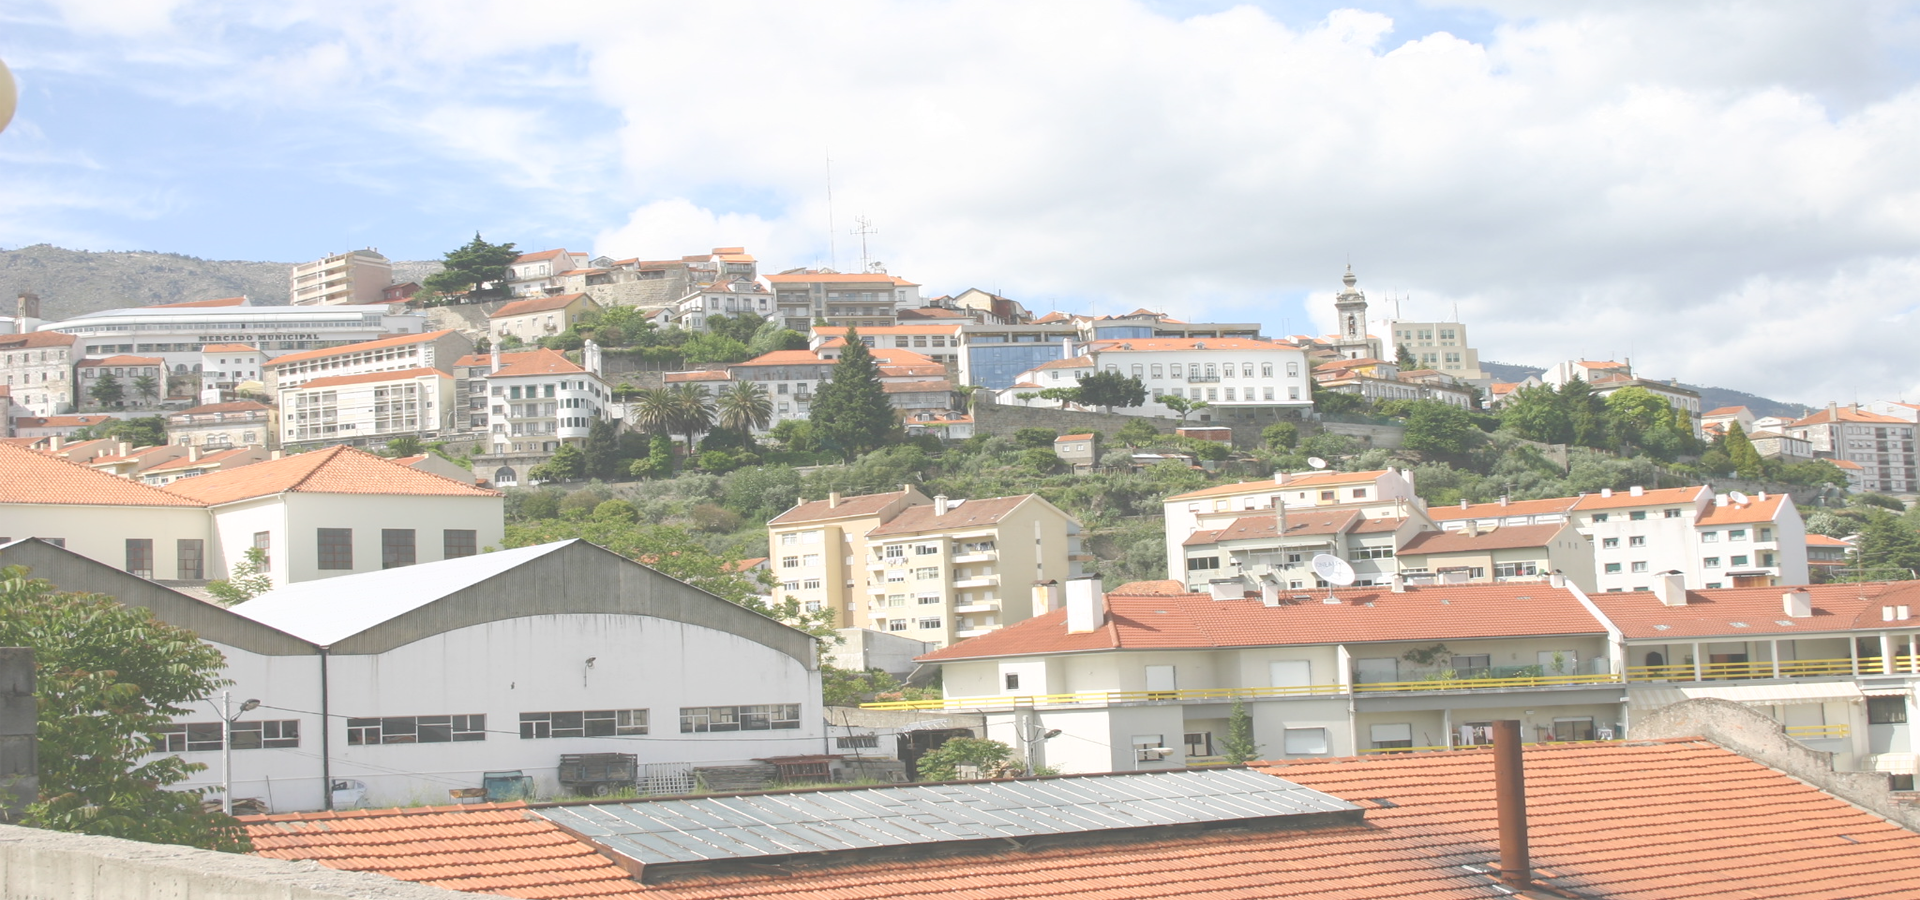 <b>Covilhã, Castelo Branco District, Centro Region, Portugal</b>